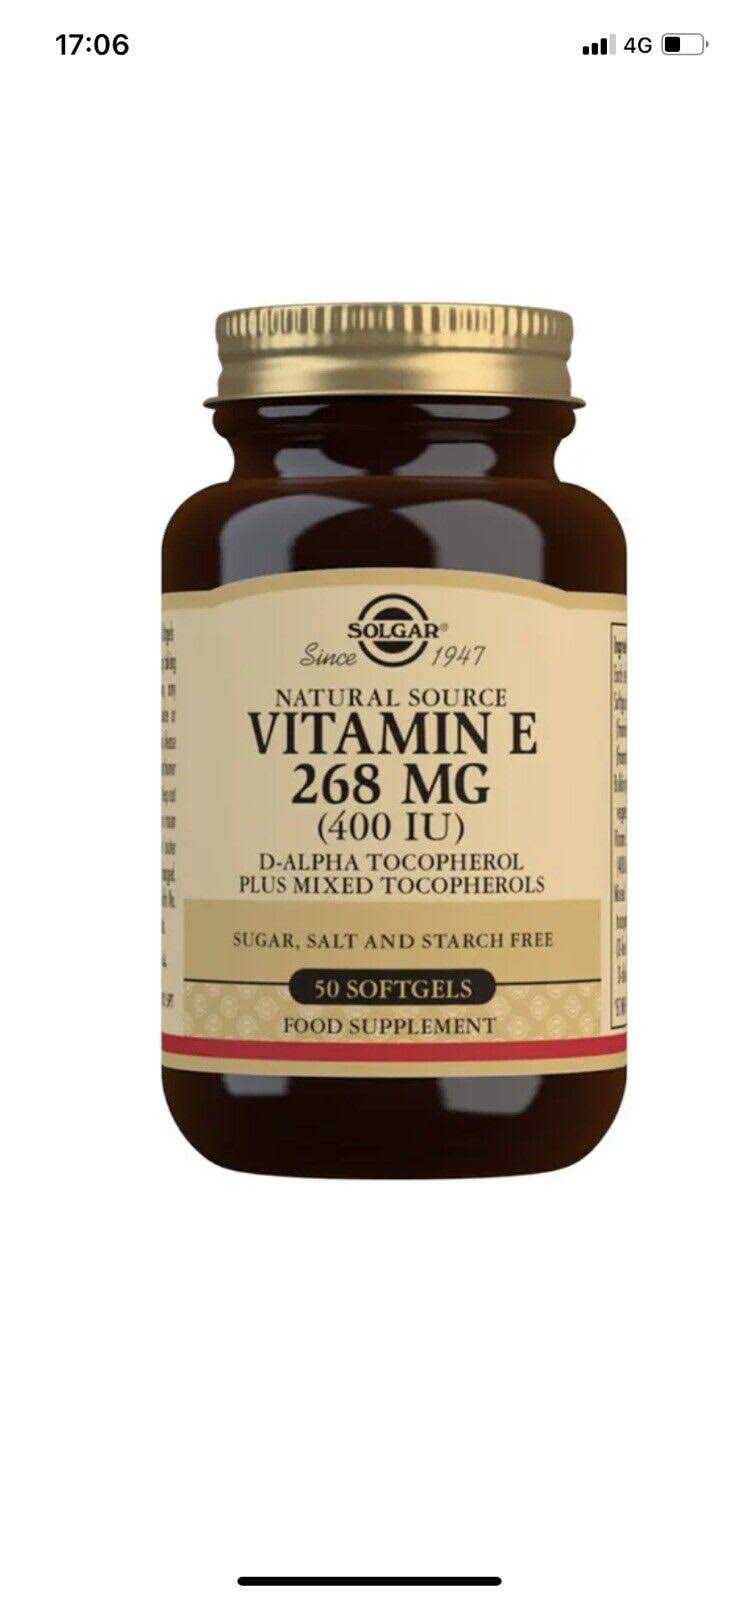 Solgar Vitamin E Dietary Supplement - 50 Softgels